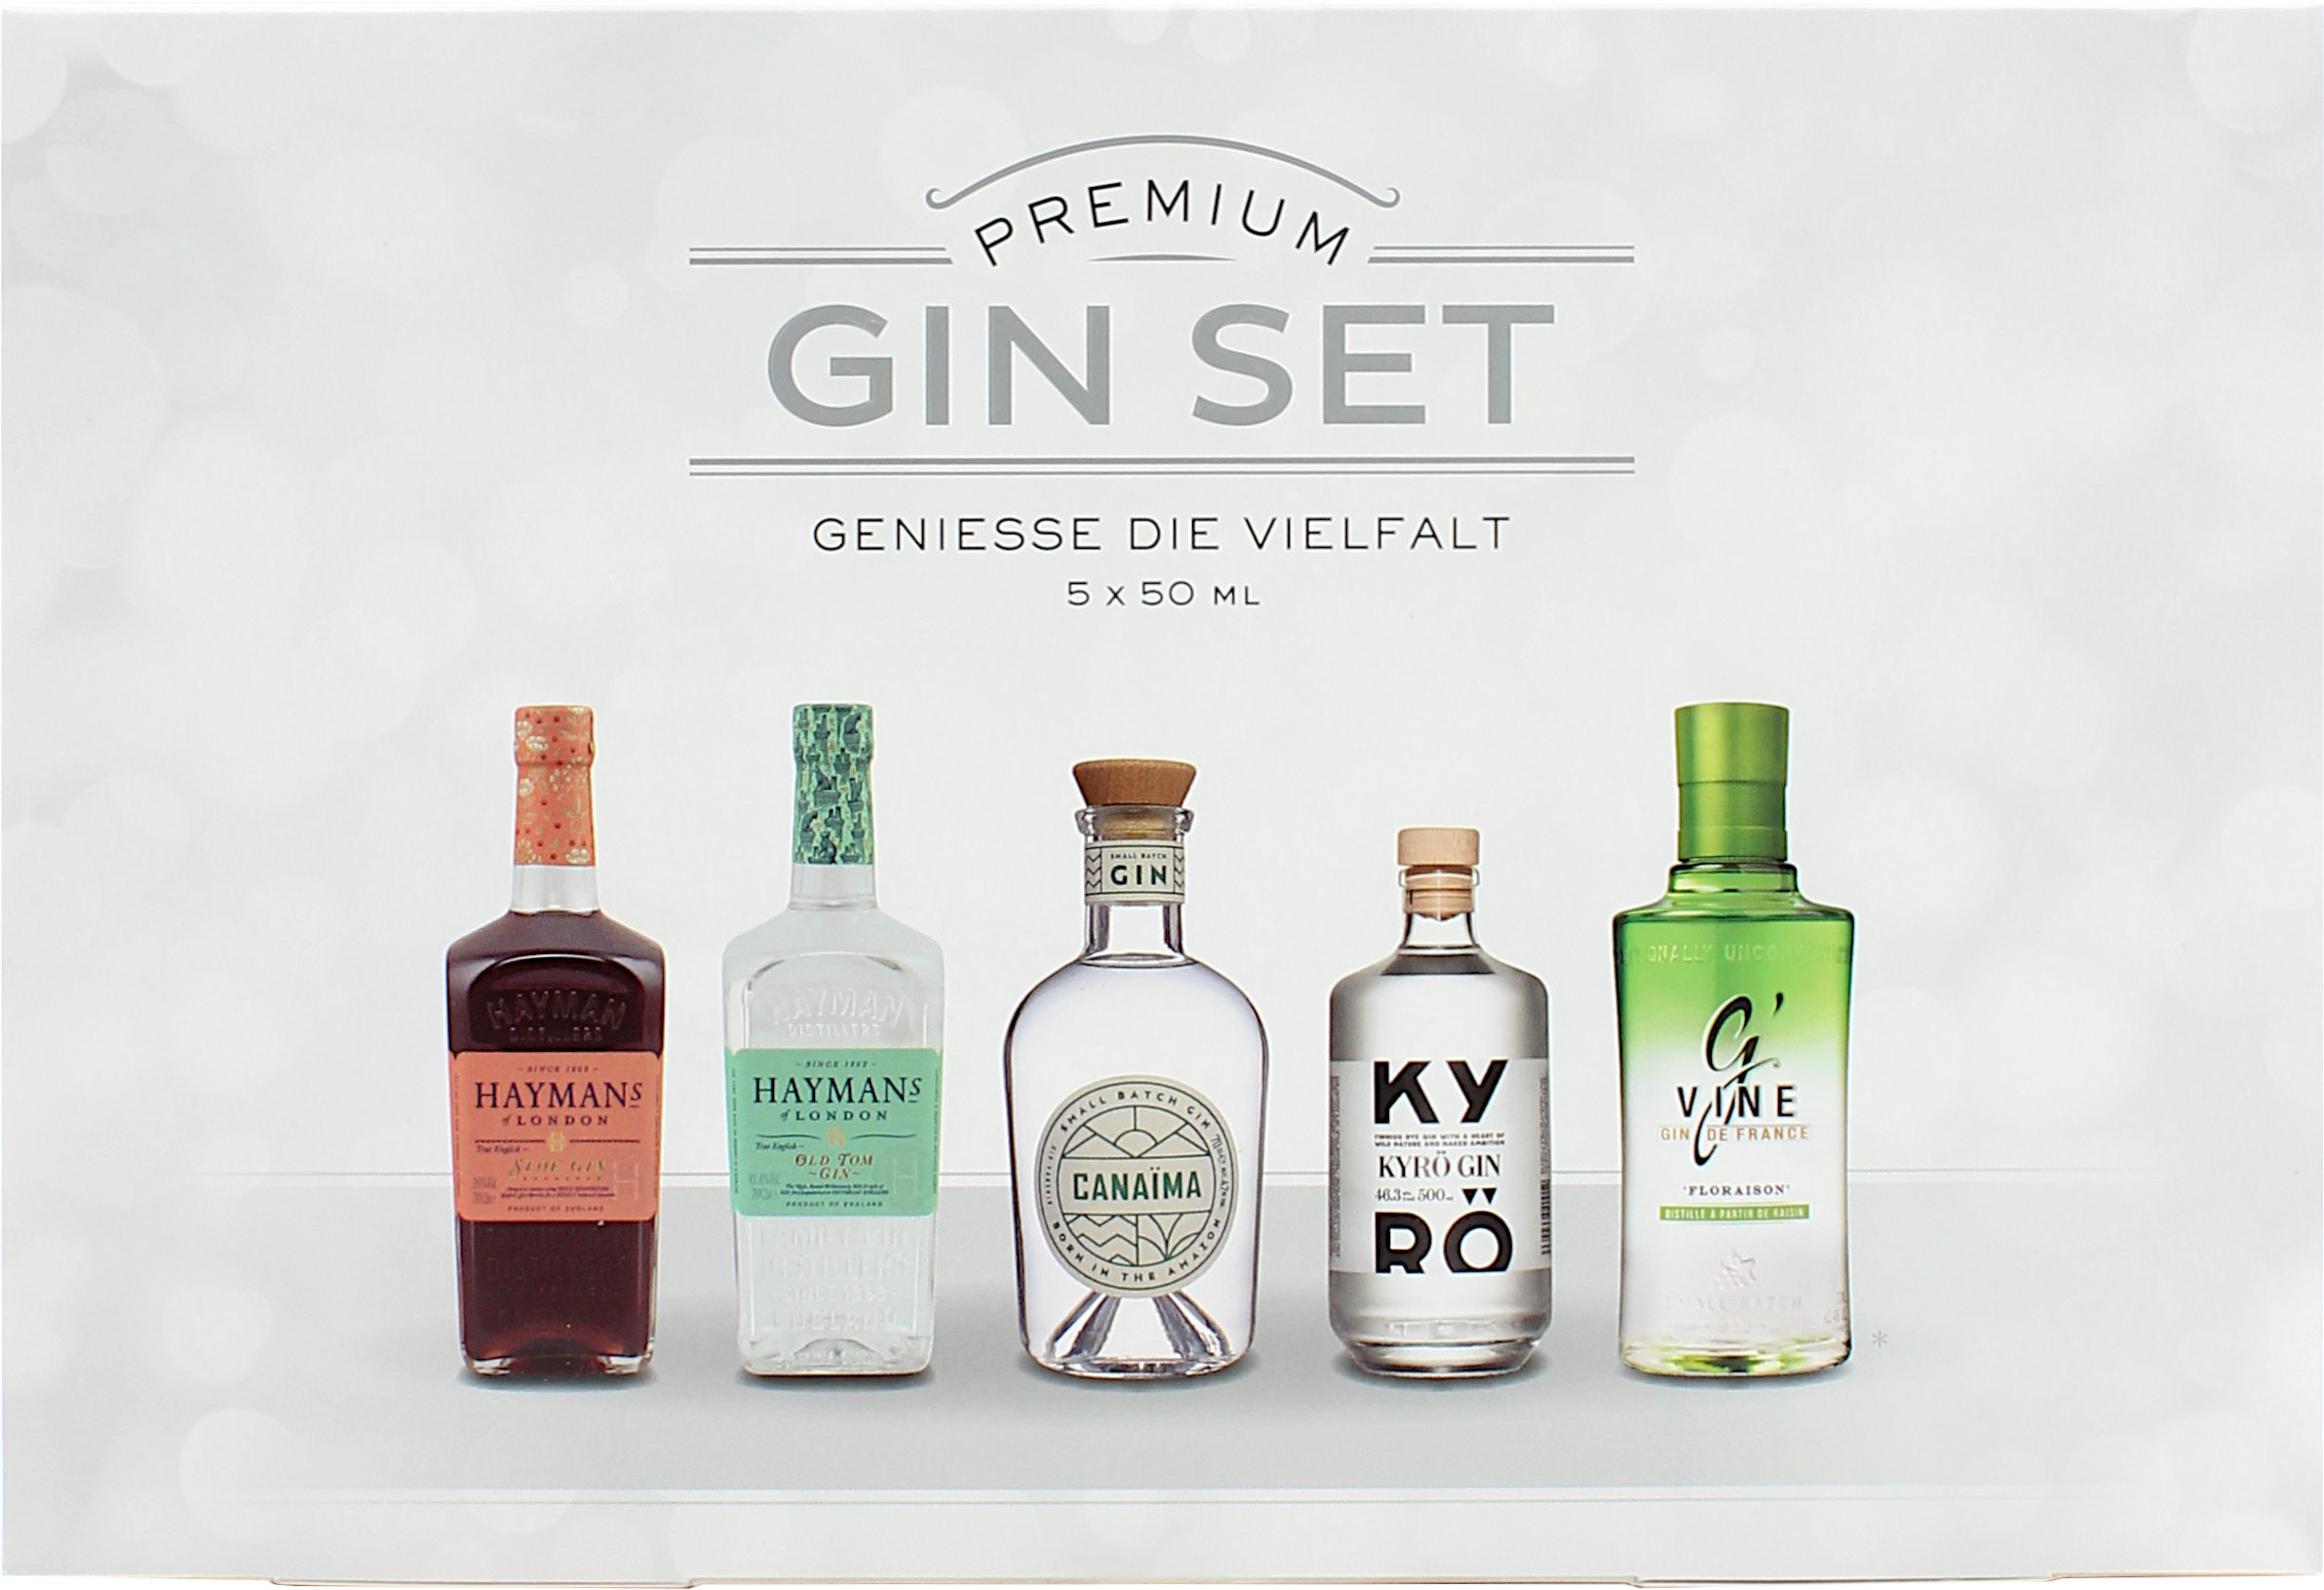 Sierra Madre Premium Gin Tasting Set 2021 40.1% 5x50ml